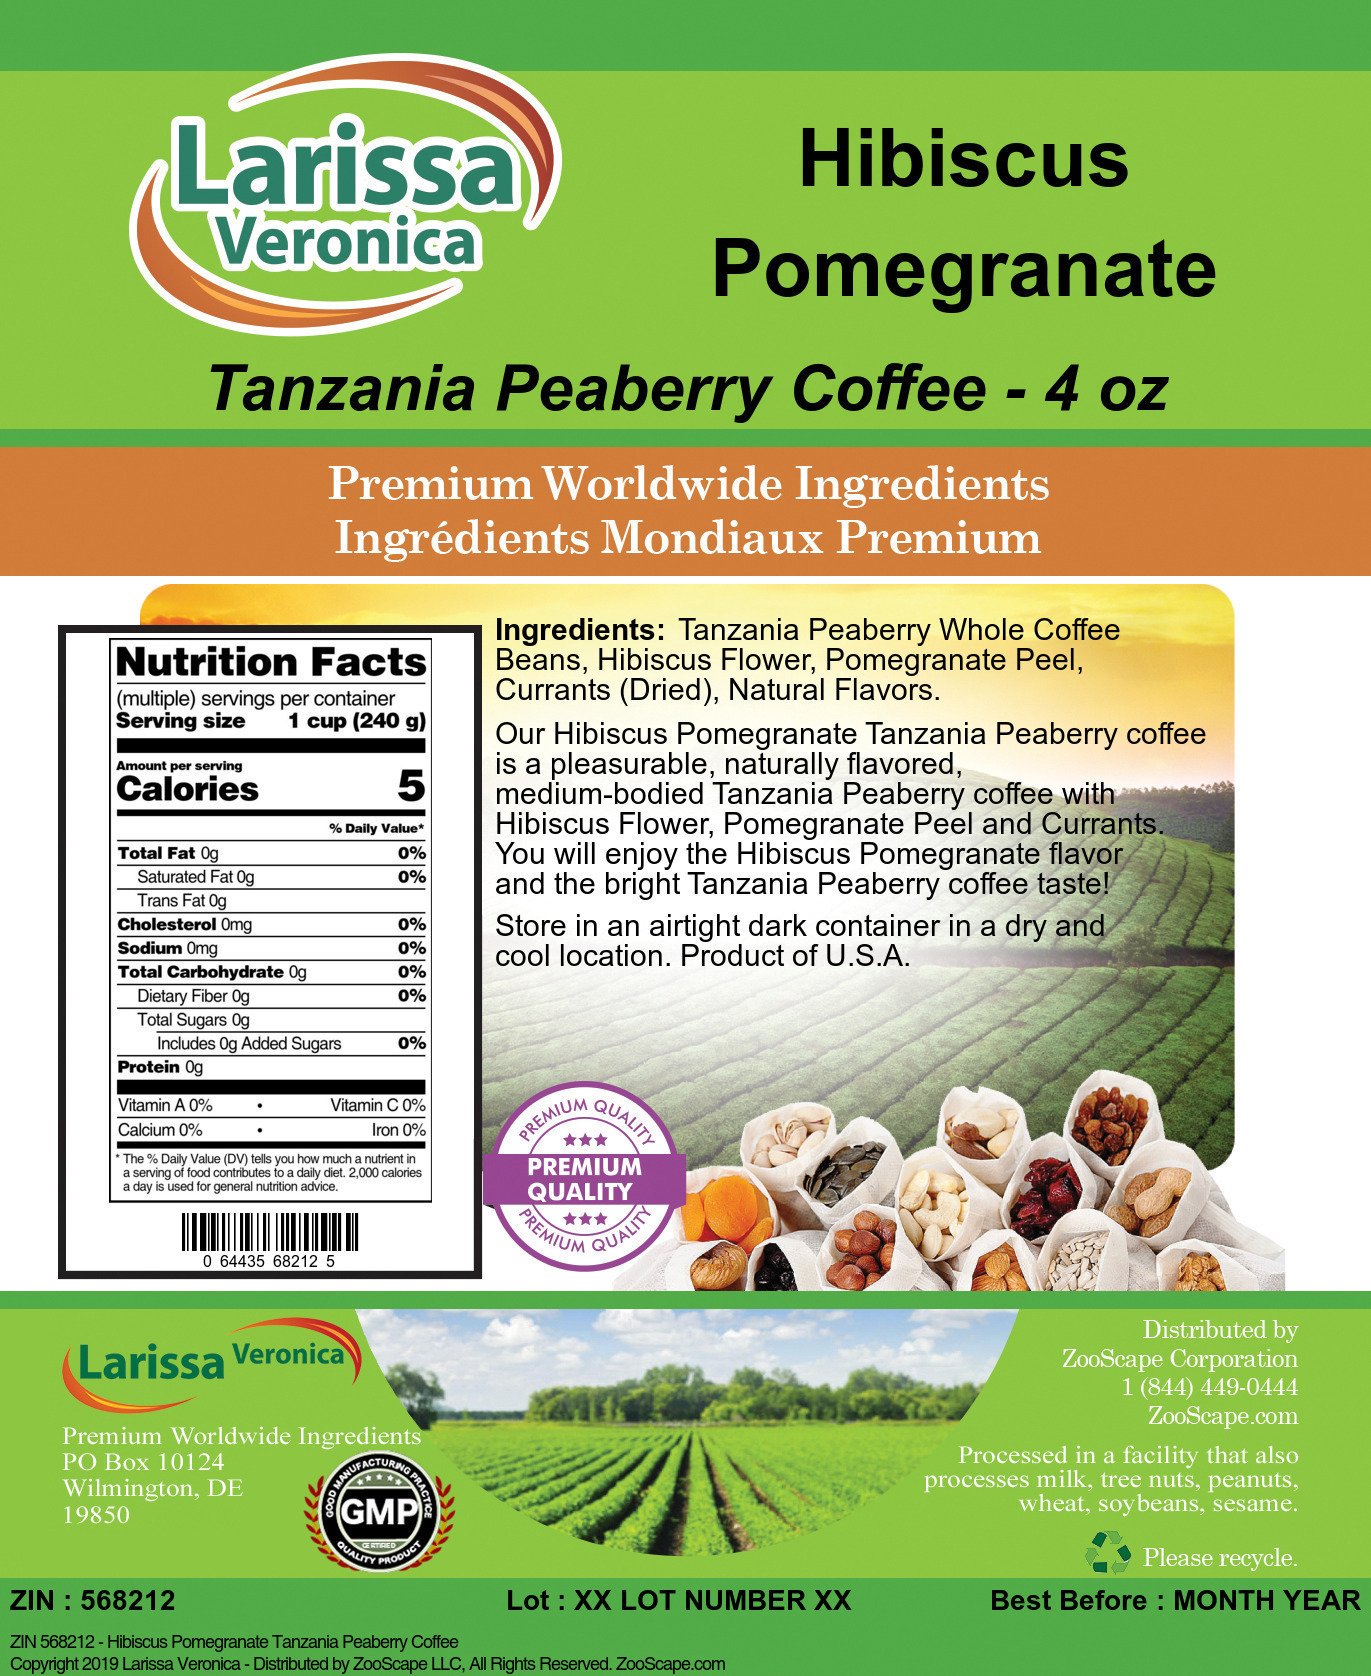 Hibiscus Pomegranate Tanzania Peaberry Coffee - Label